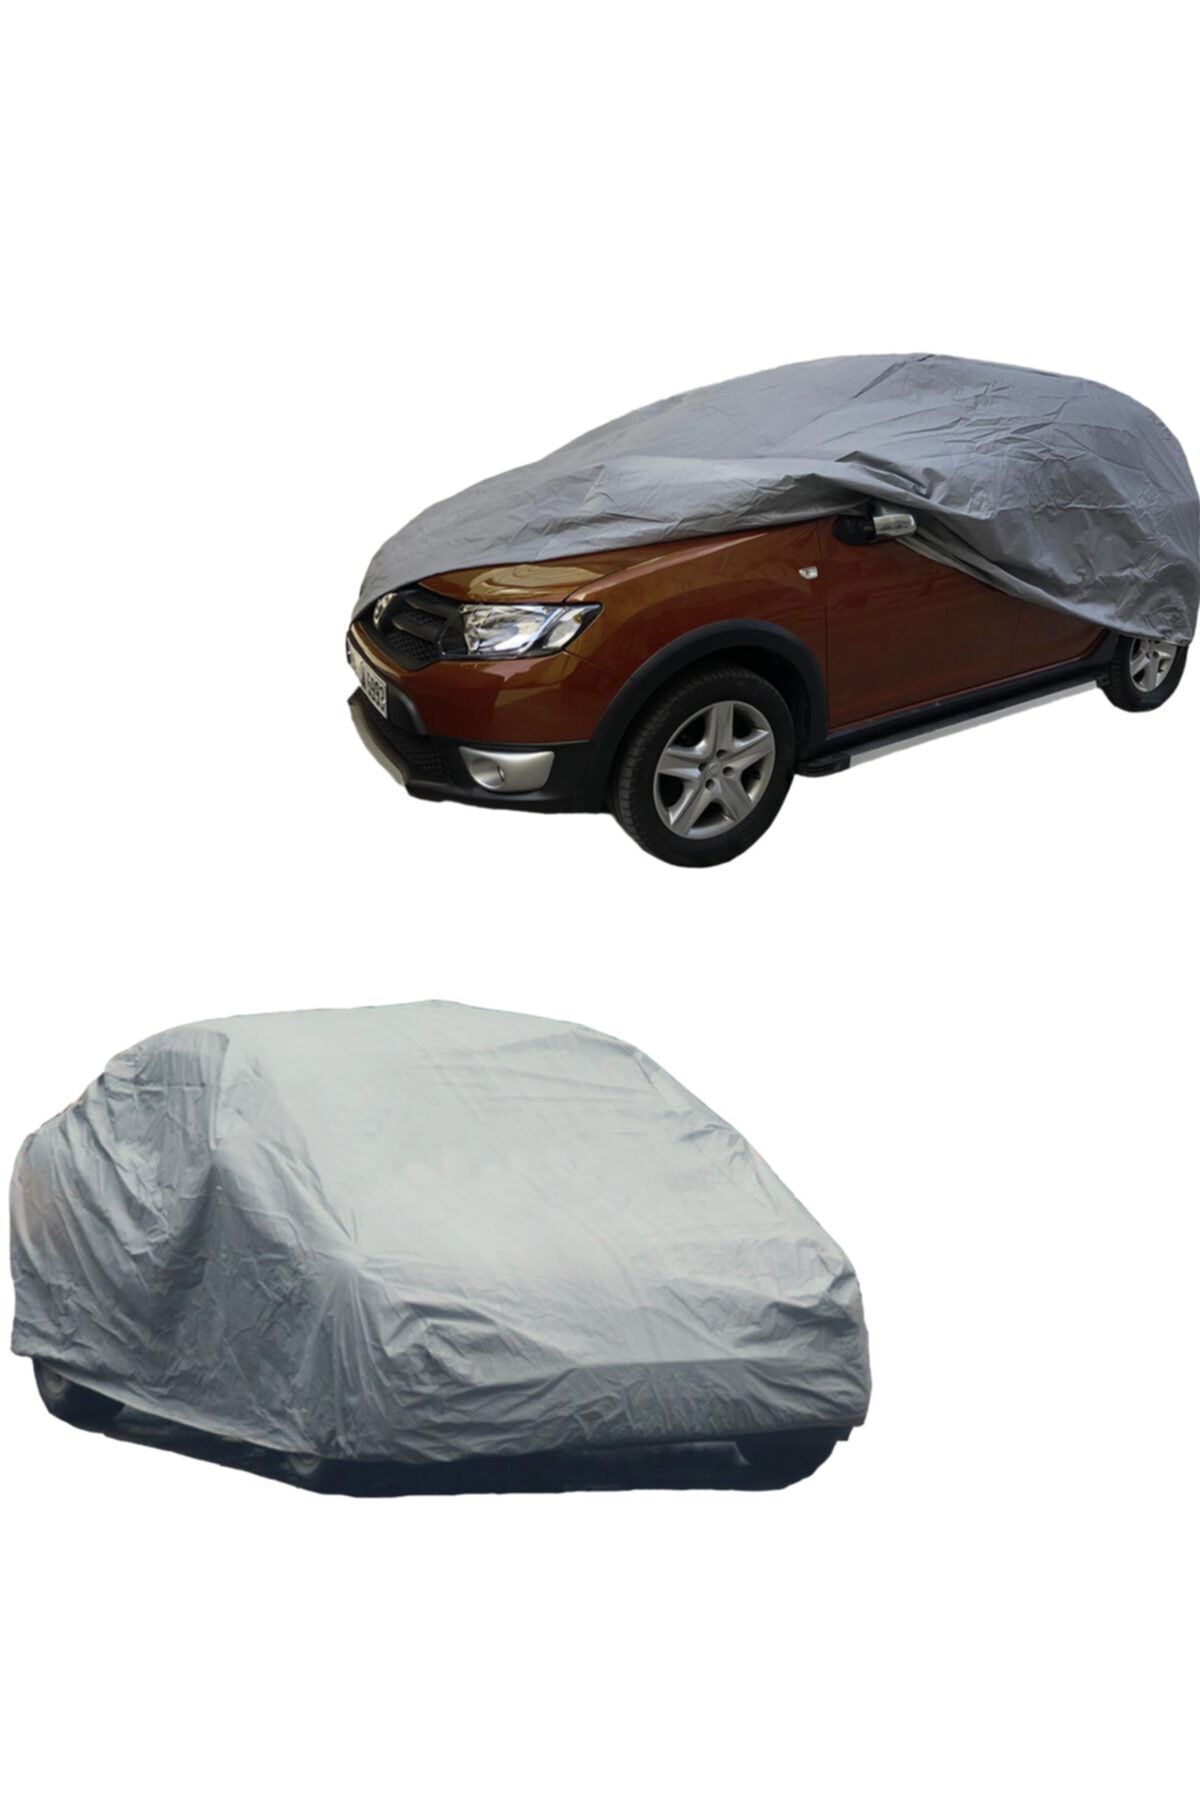 AUTOKN Cıtroën DS3 Convertible Car Tarpaulin, Cover, Tent - Trendyol